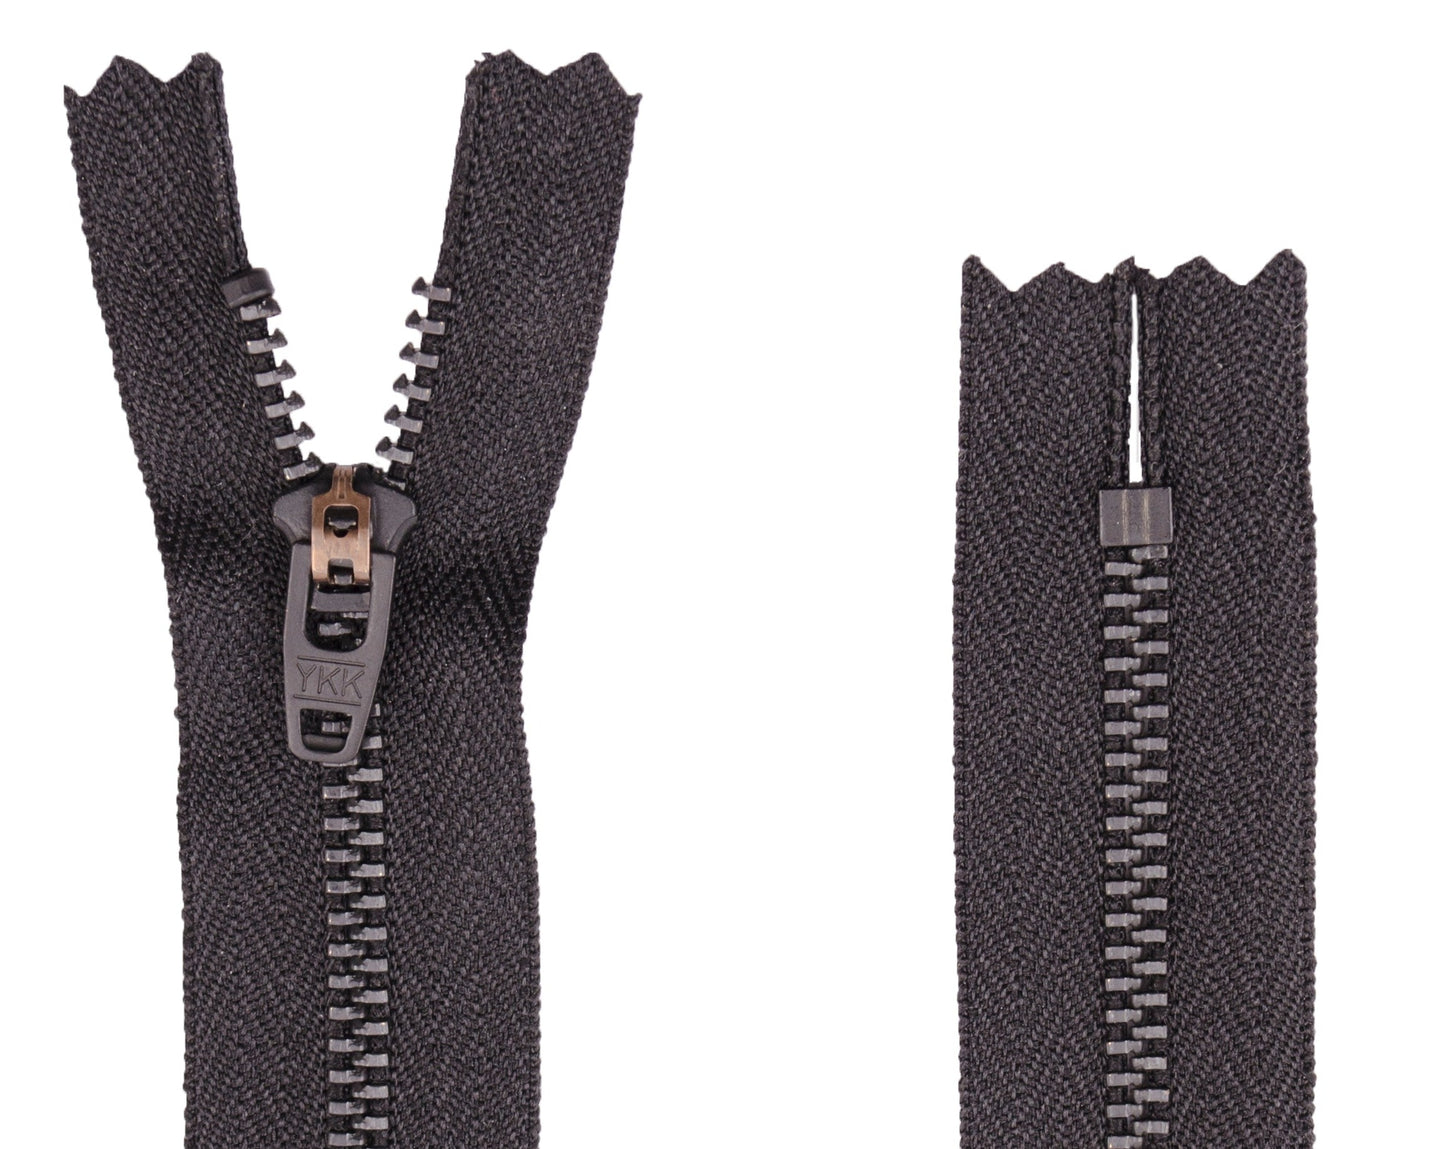 Jeans YKK zipper YGRKC-39 GSN8 X6 PJR12 (580) Black